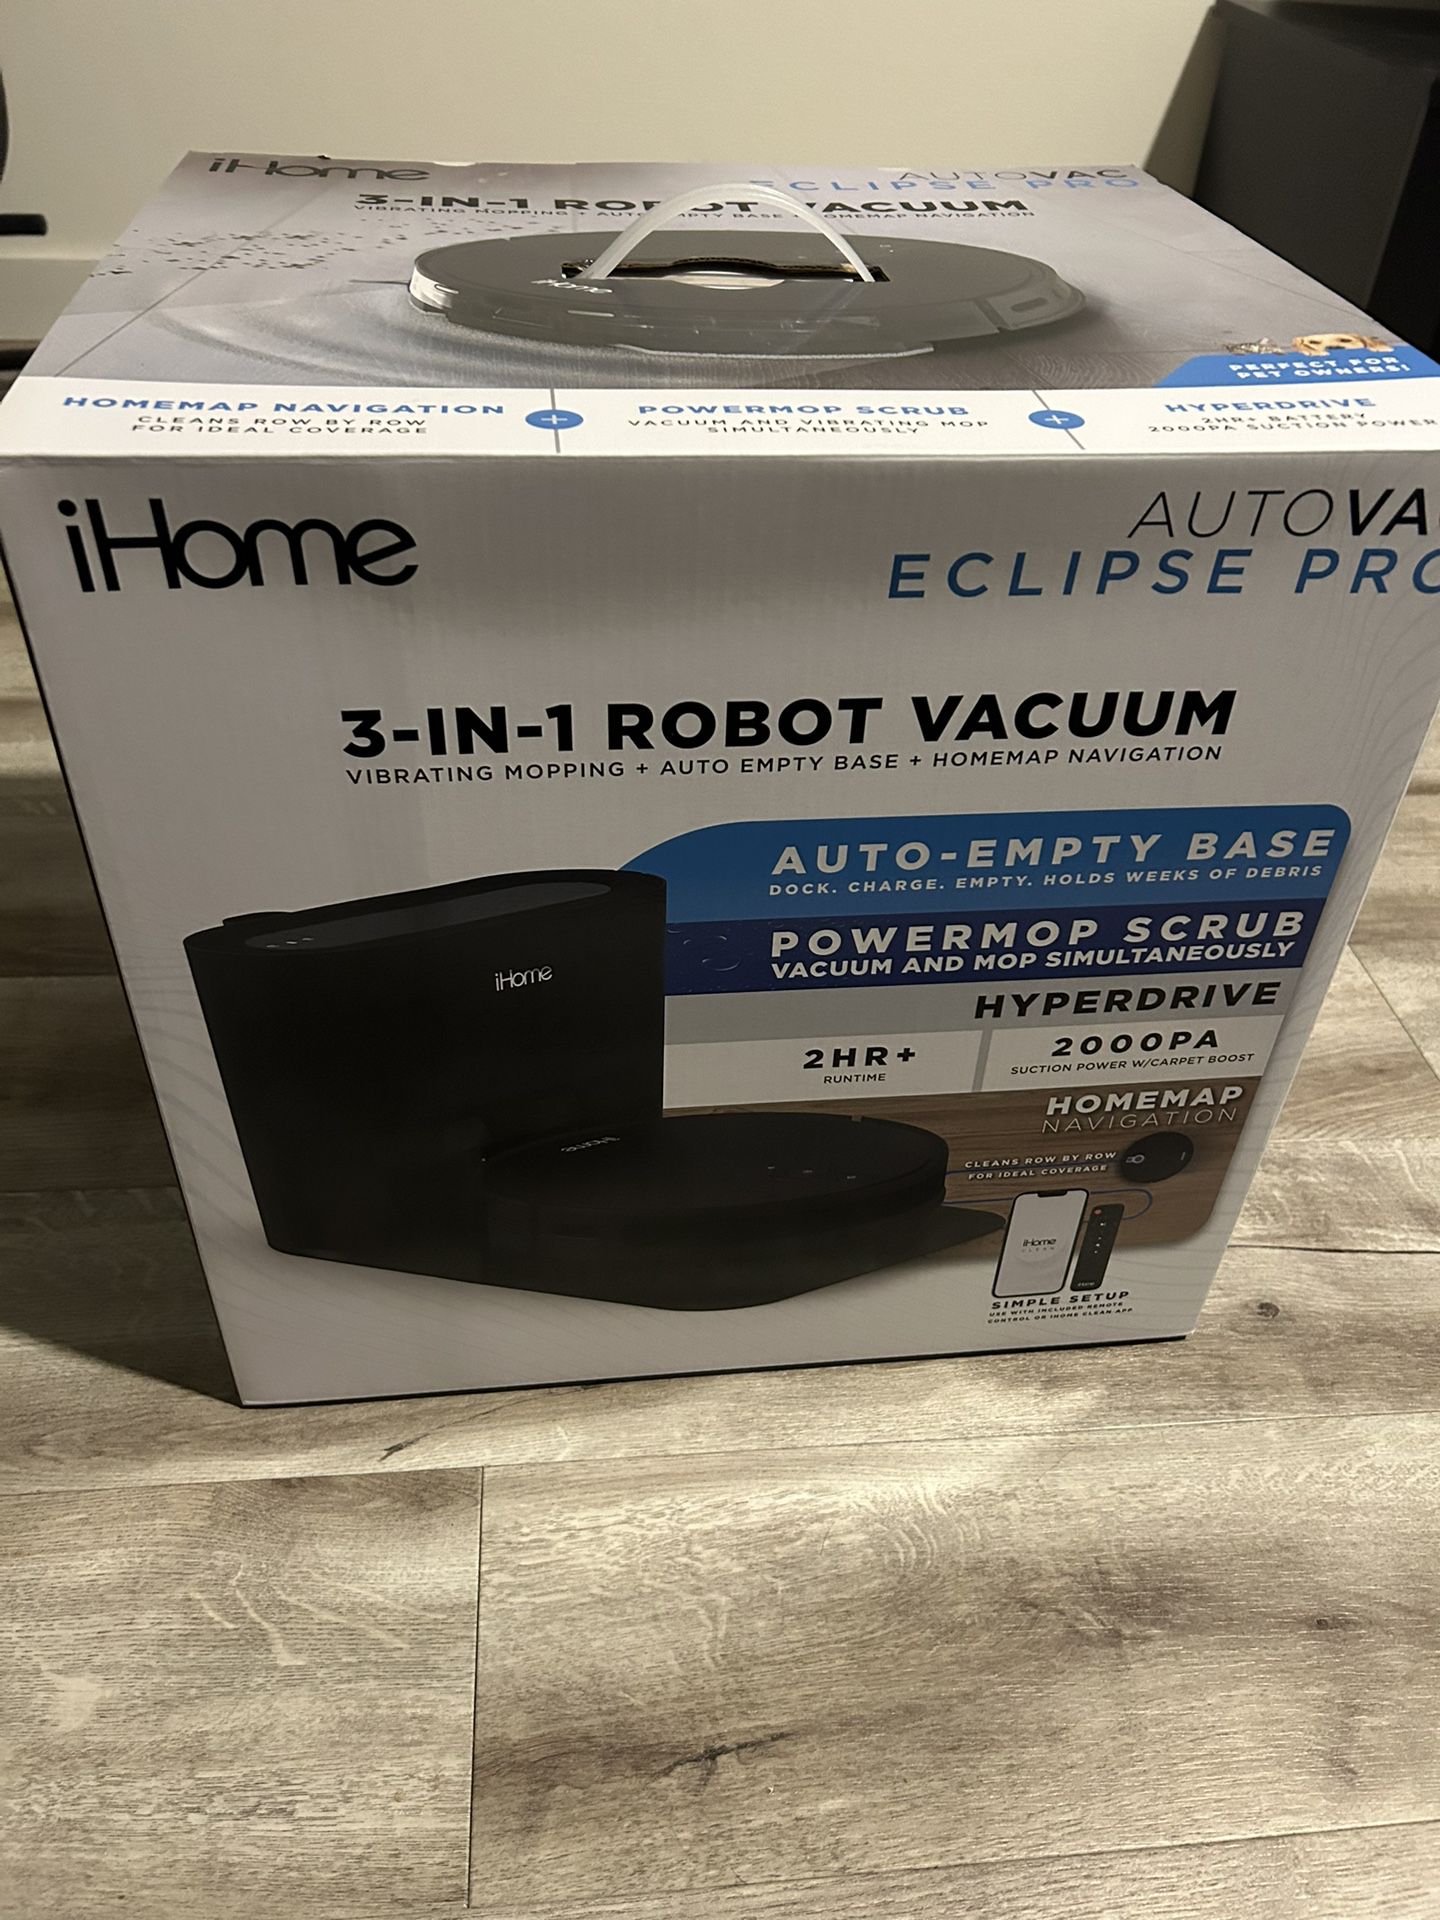 IRobot Vacuum Mop